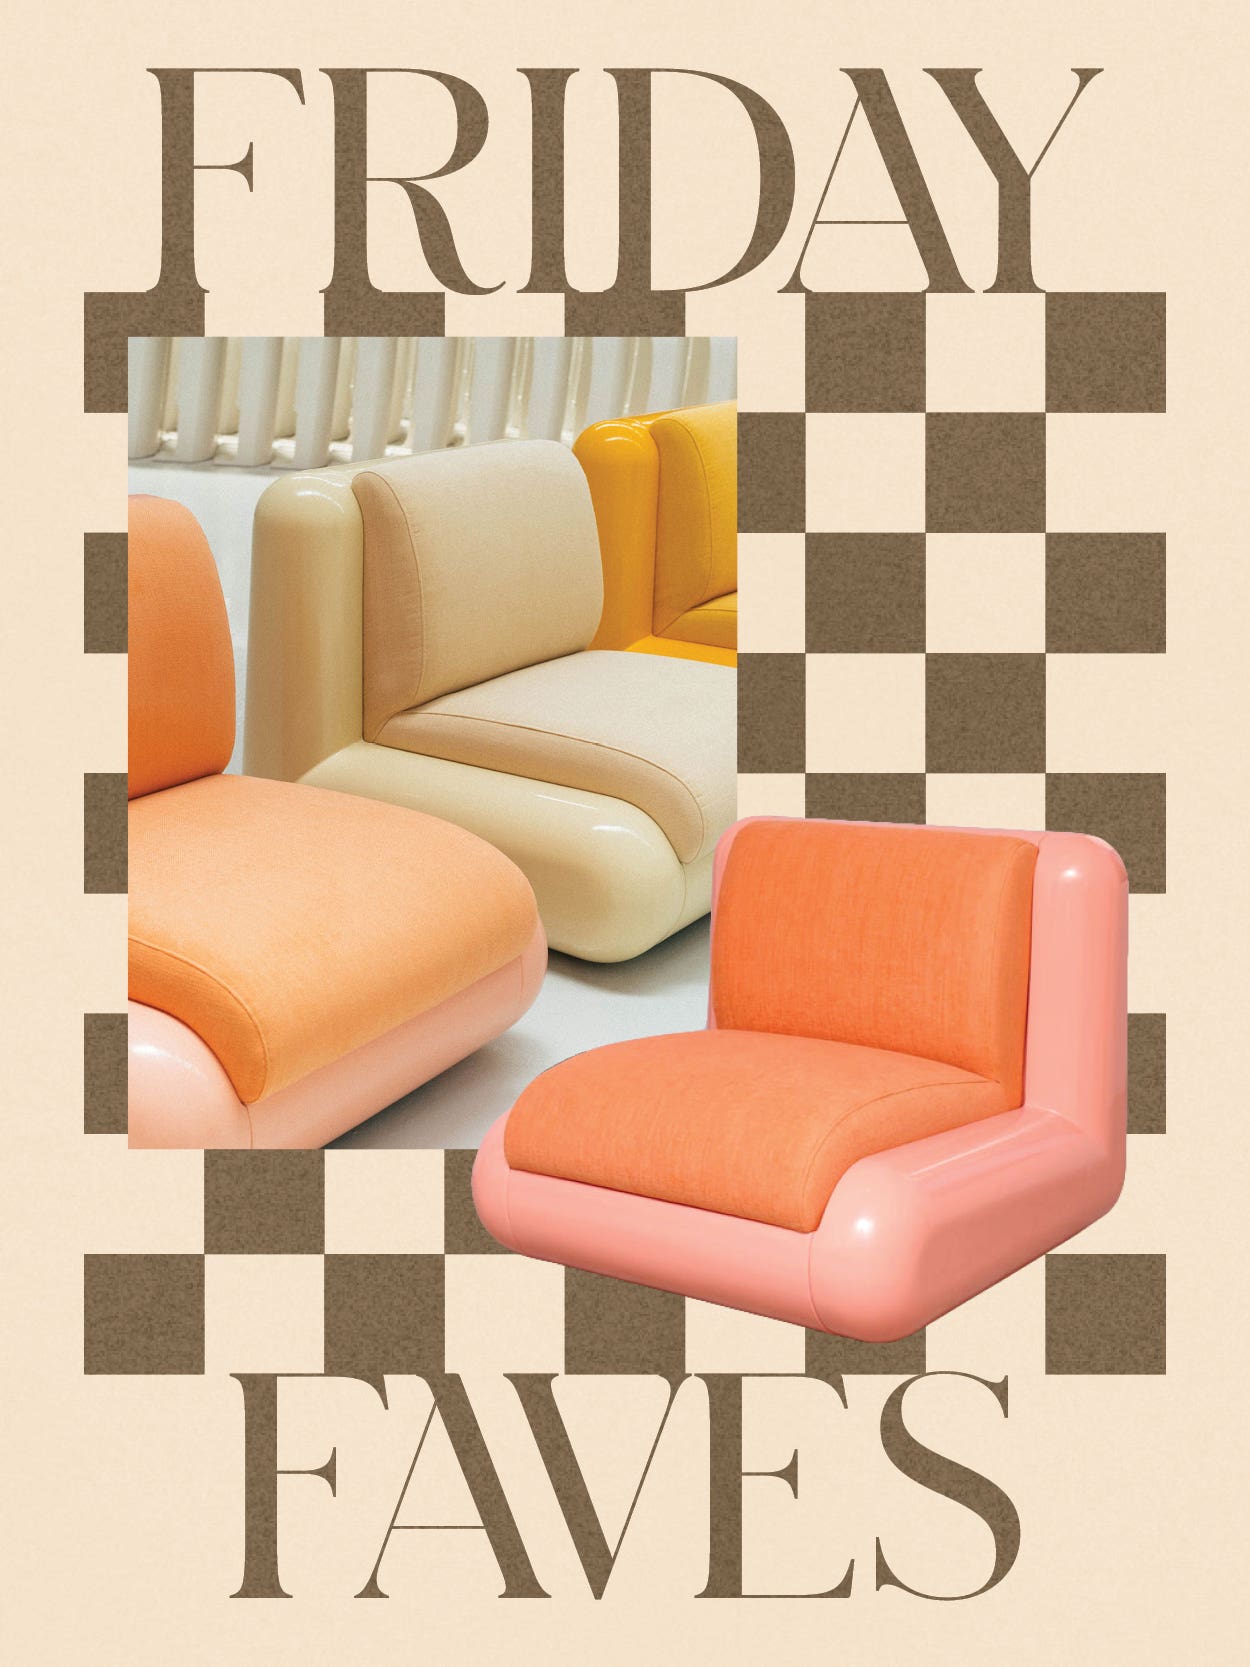 holloway li x uma T4 modular chair on Friday Faves template